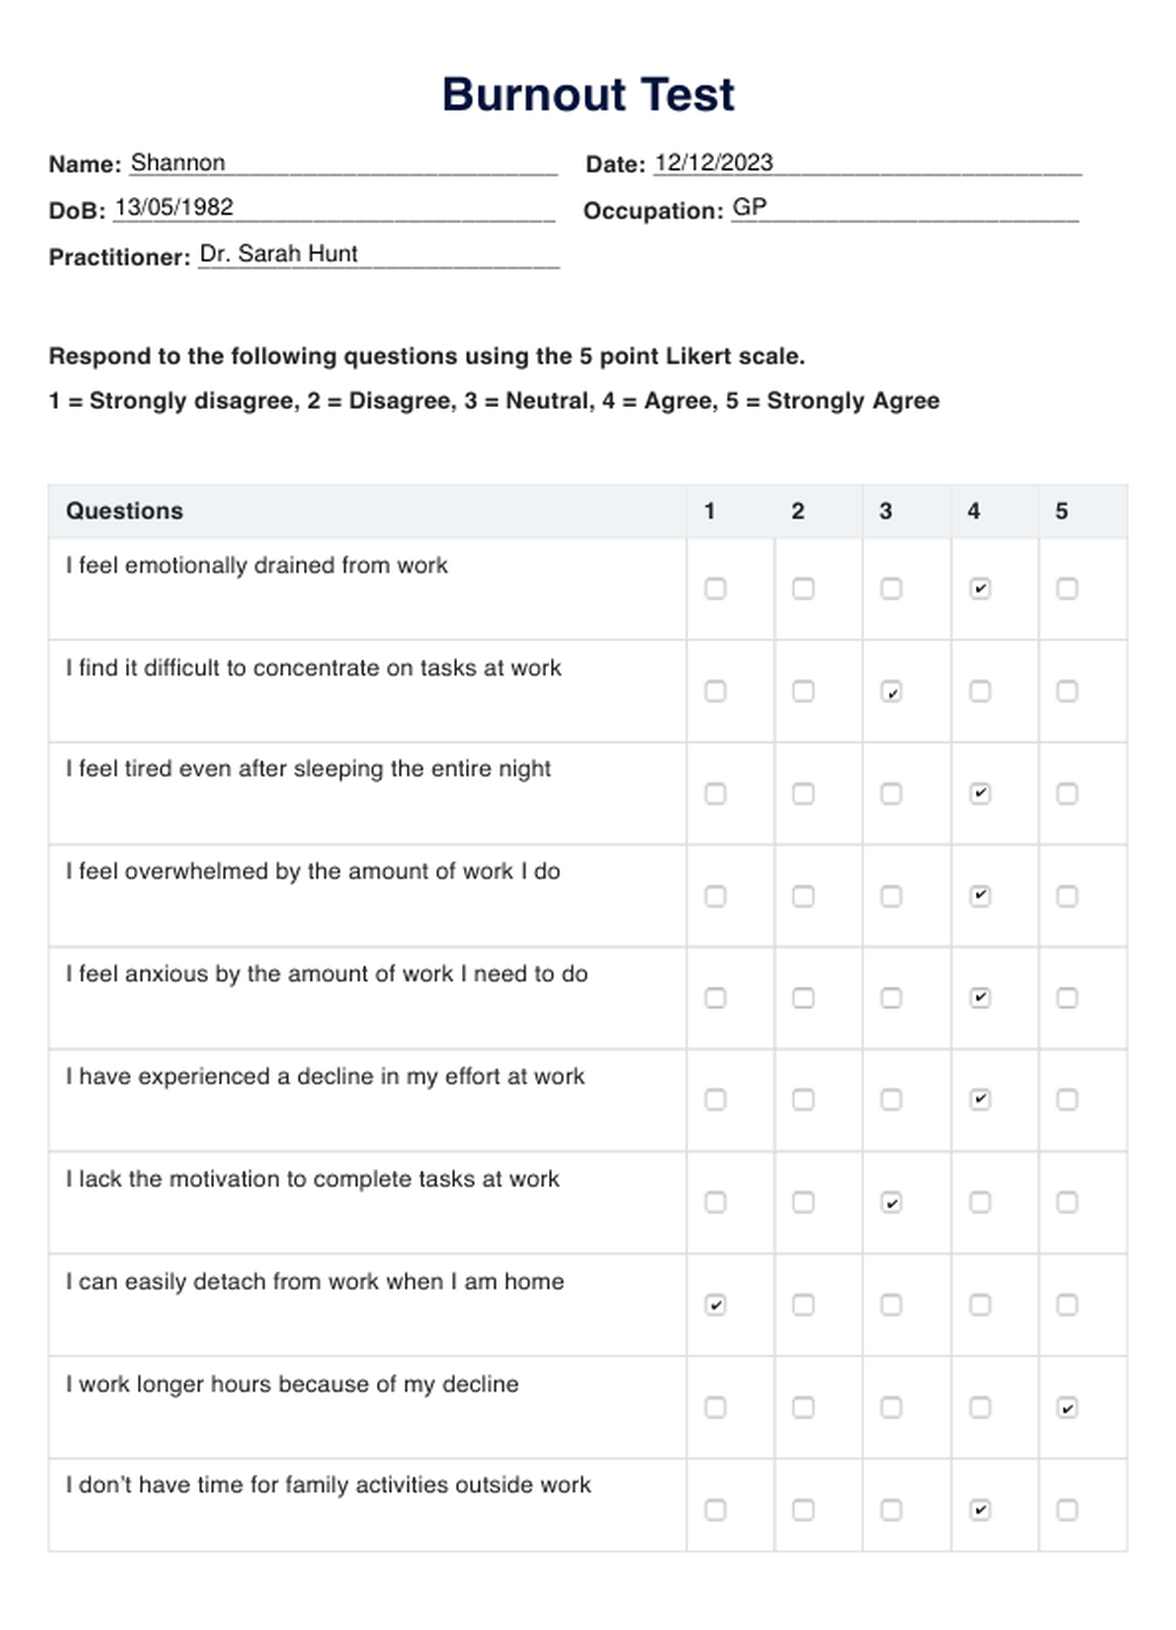 Burnout Test Template PDF Example